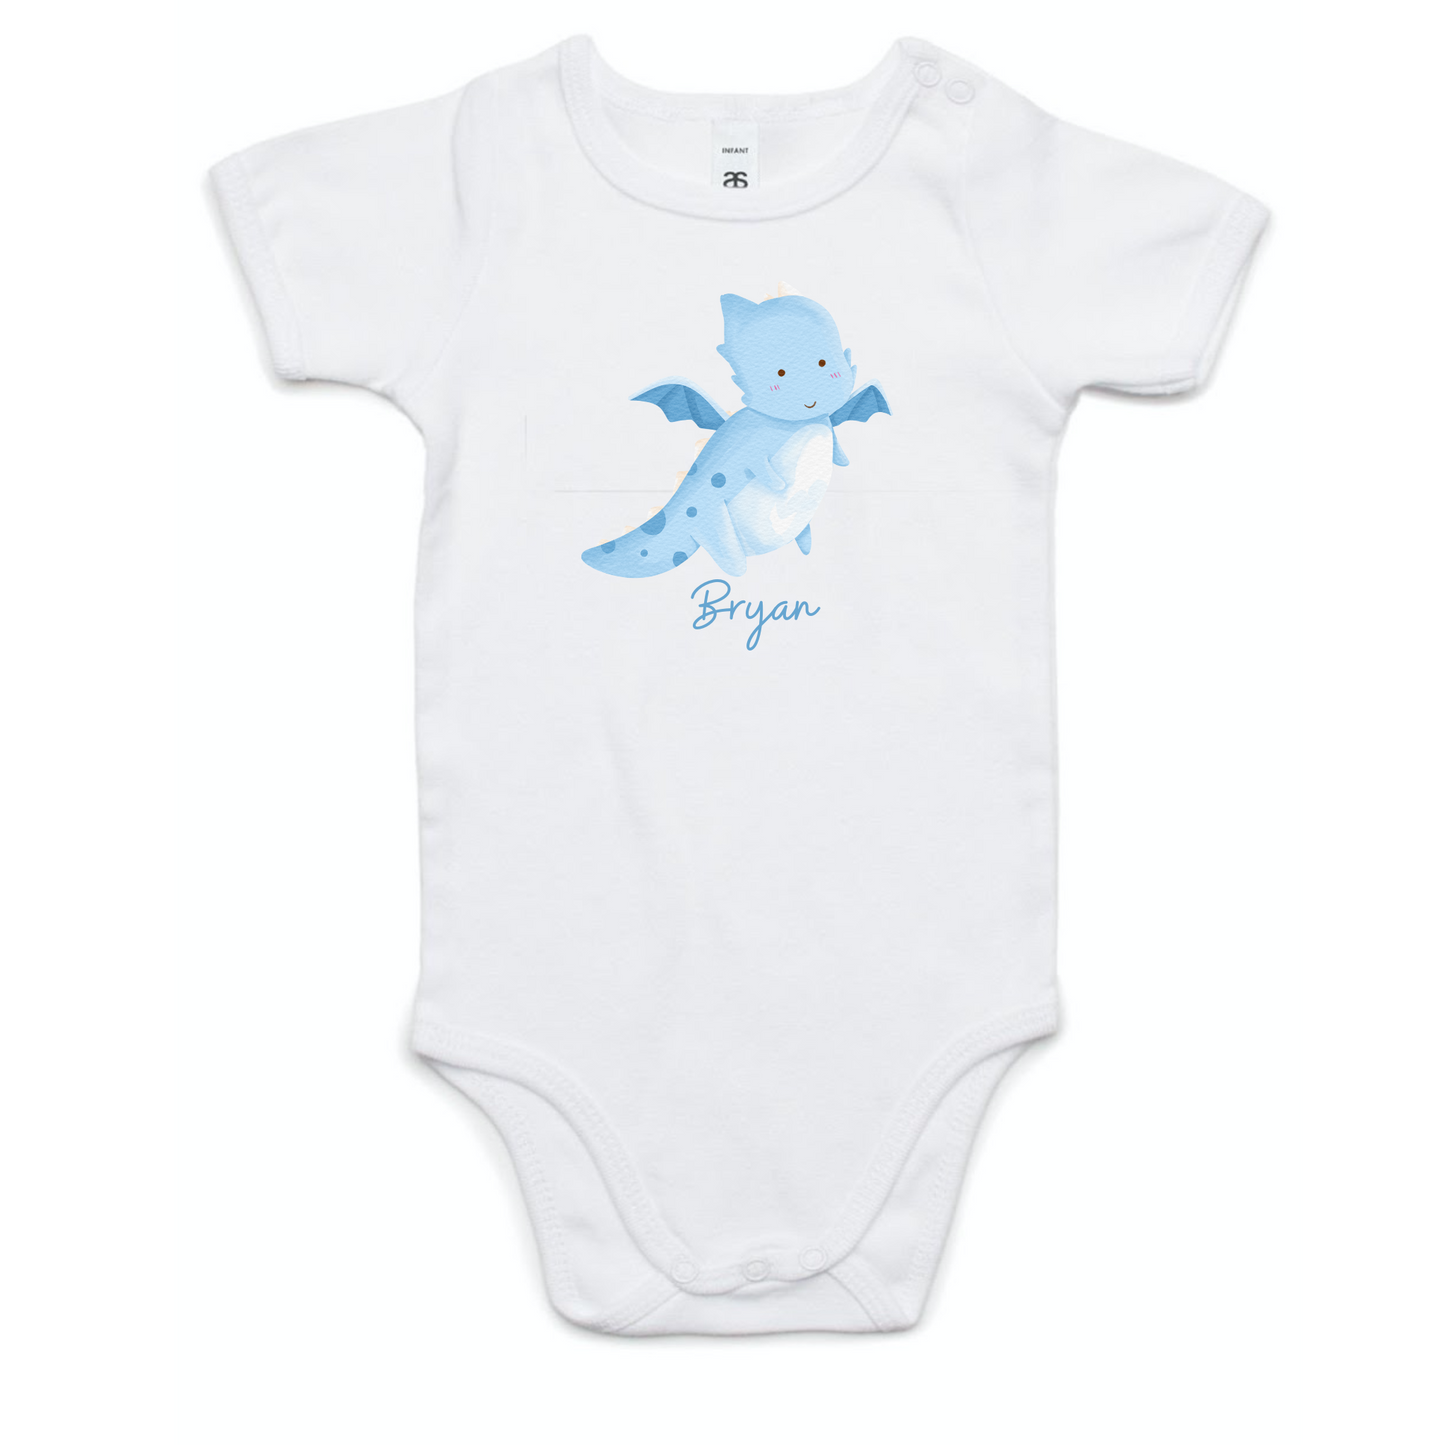 Customised Name Blue Dragon Baby Romper